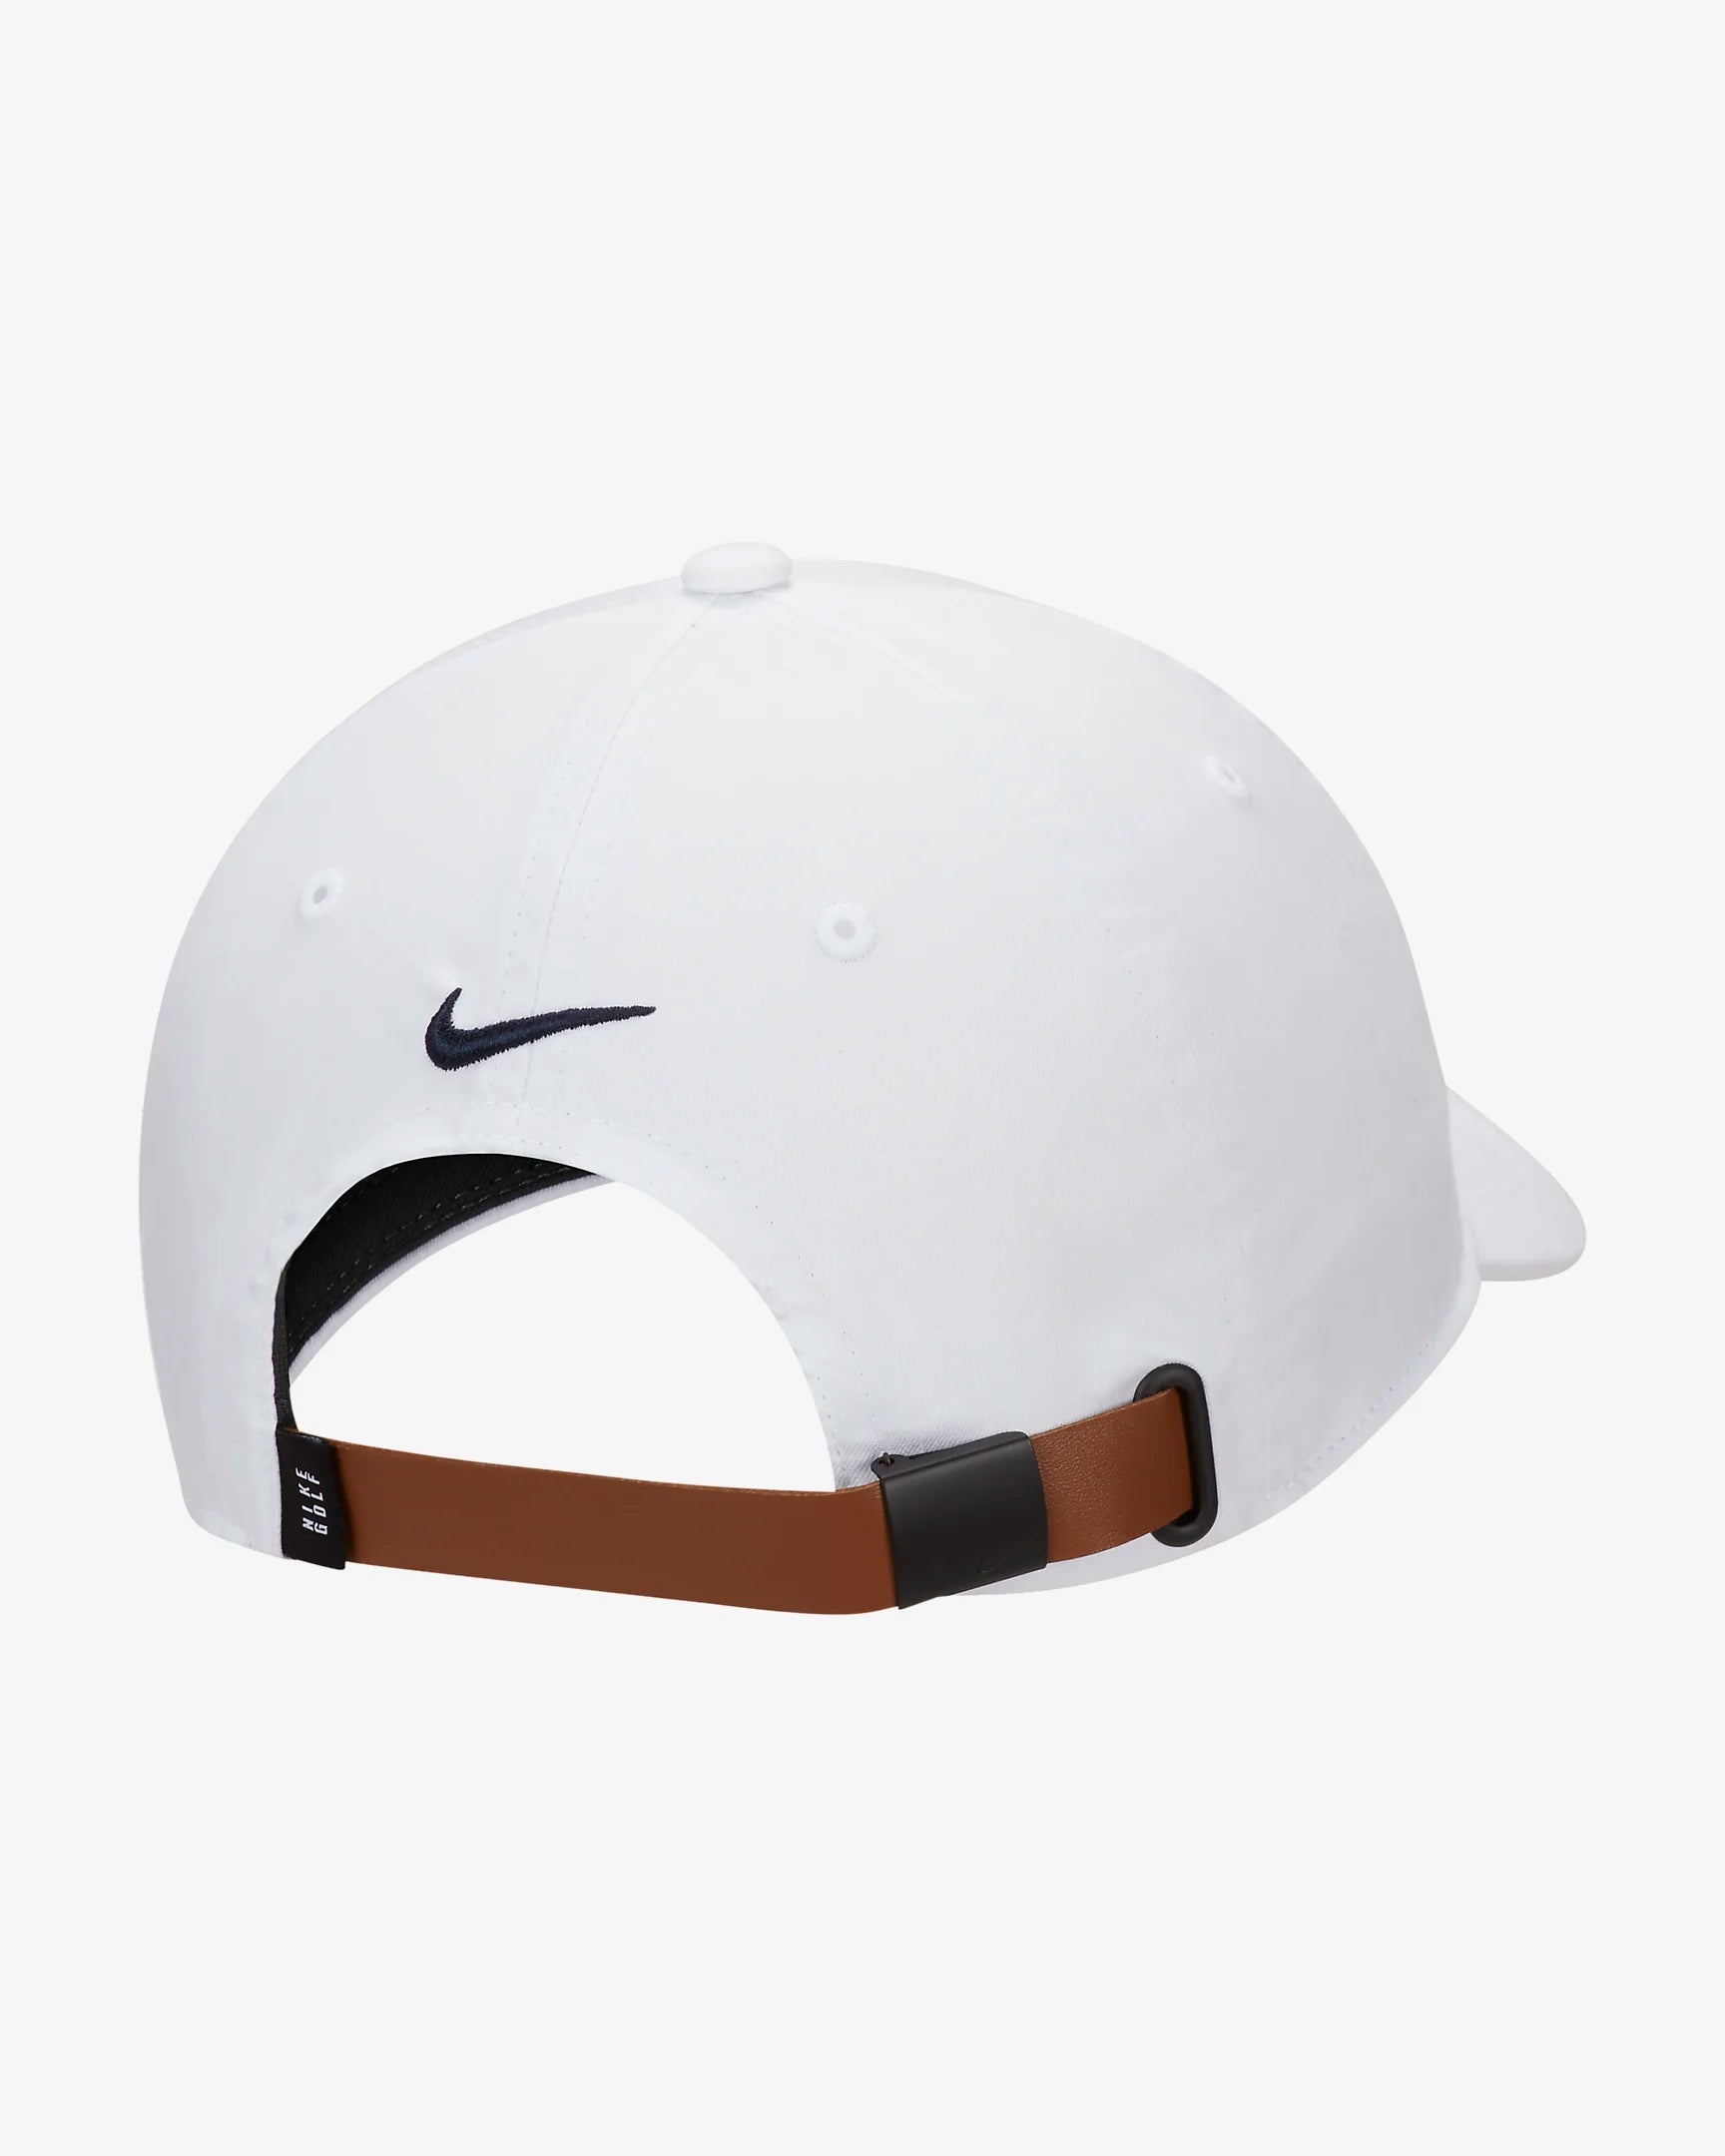 Nike Men's Aerobill Heritage86 Player Golf Hat, White/Anthracite